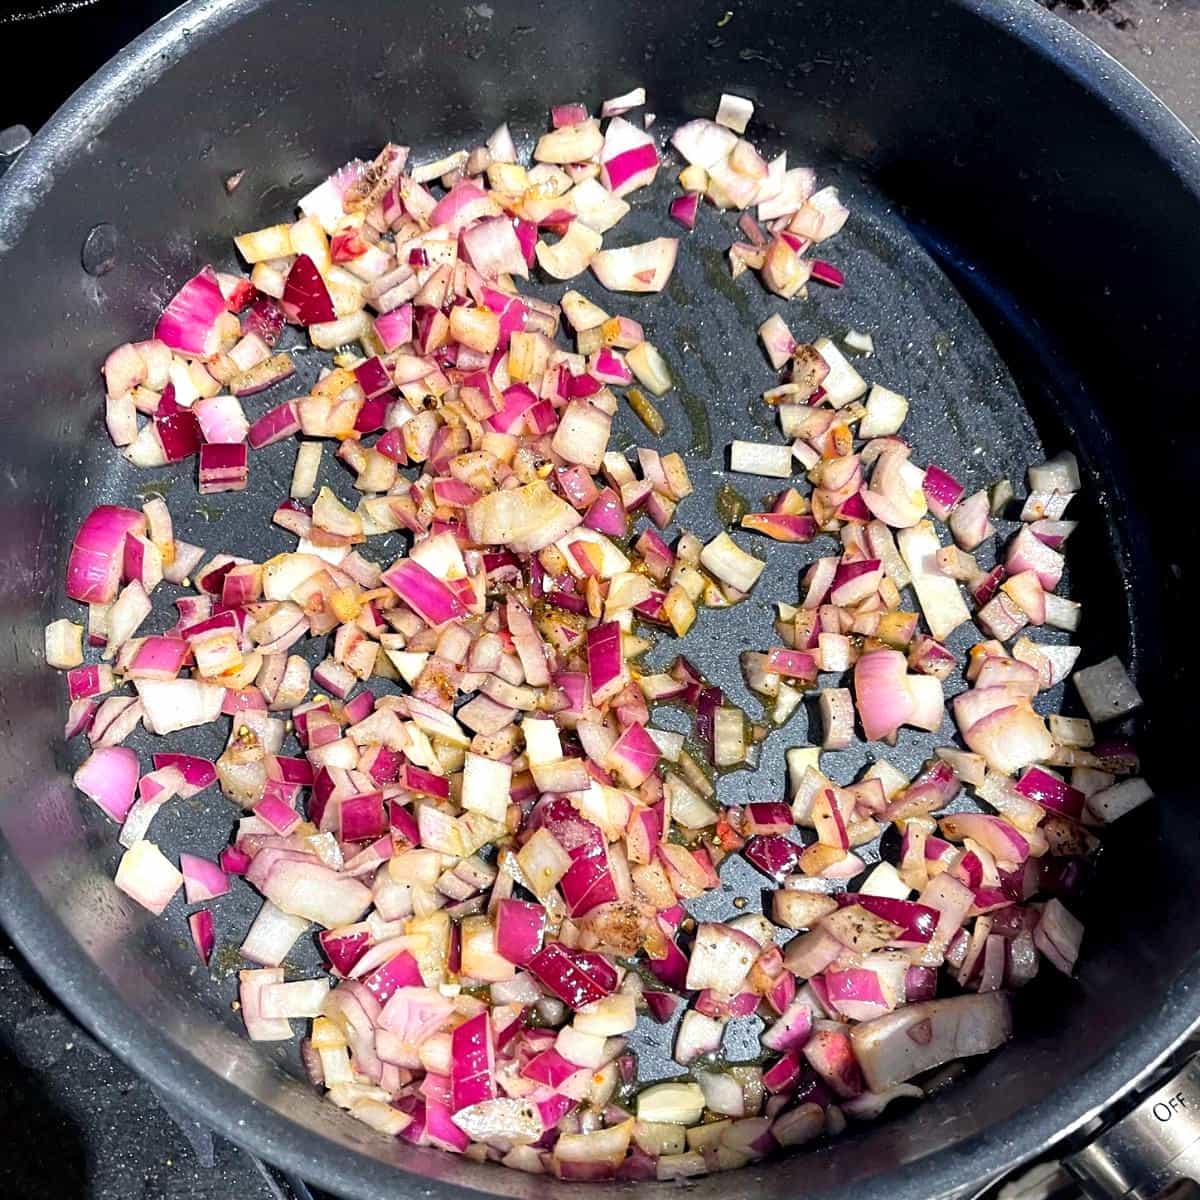 Onions sauteing for khoresh bademjan.